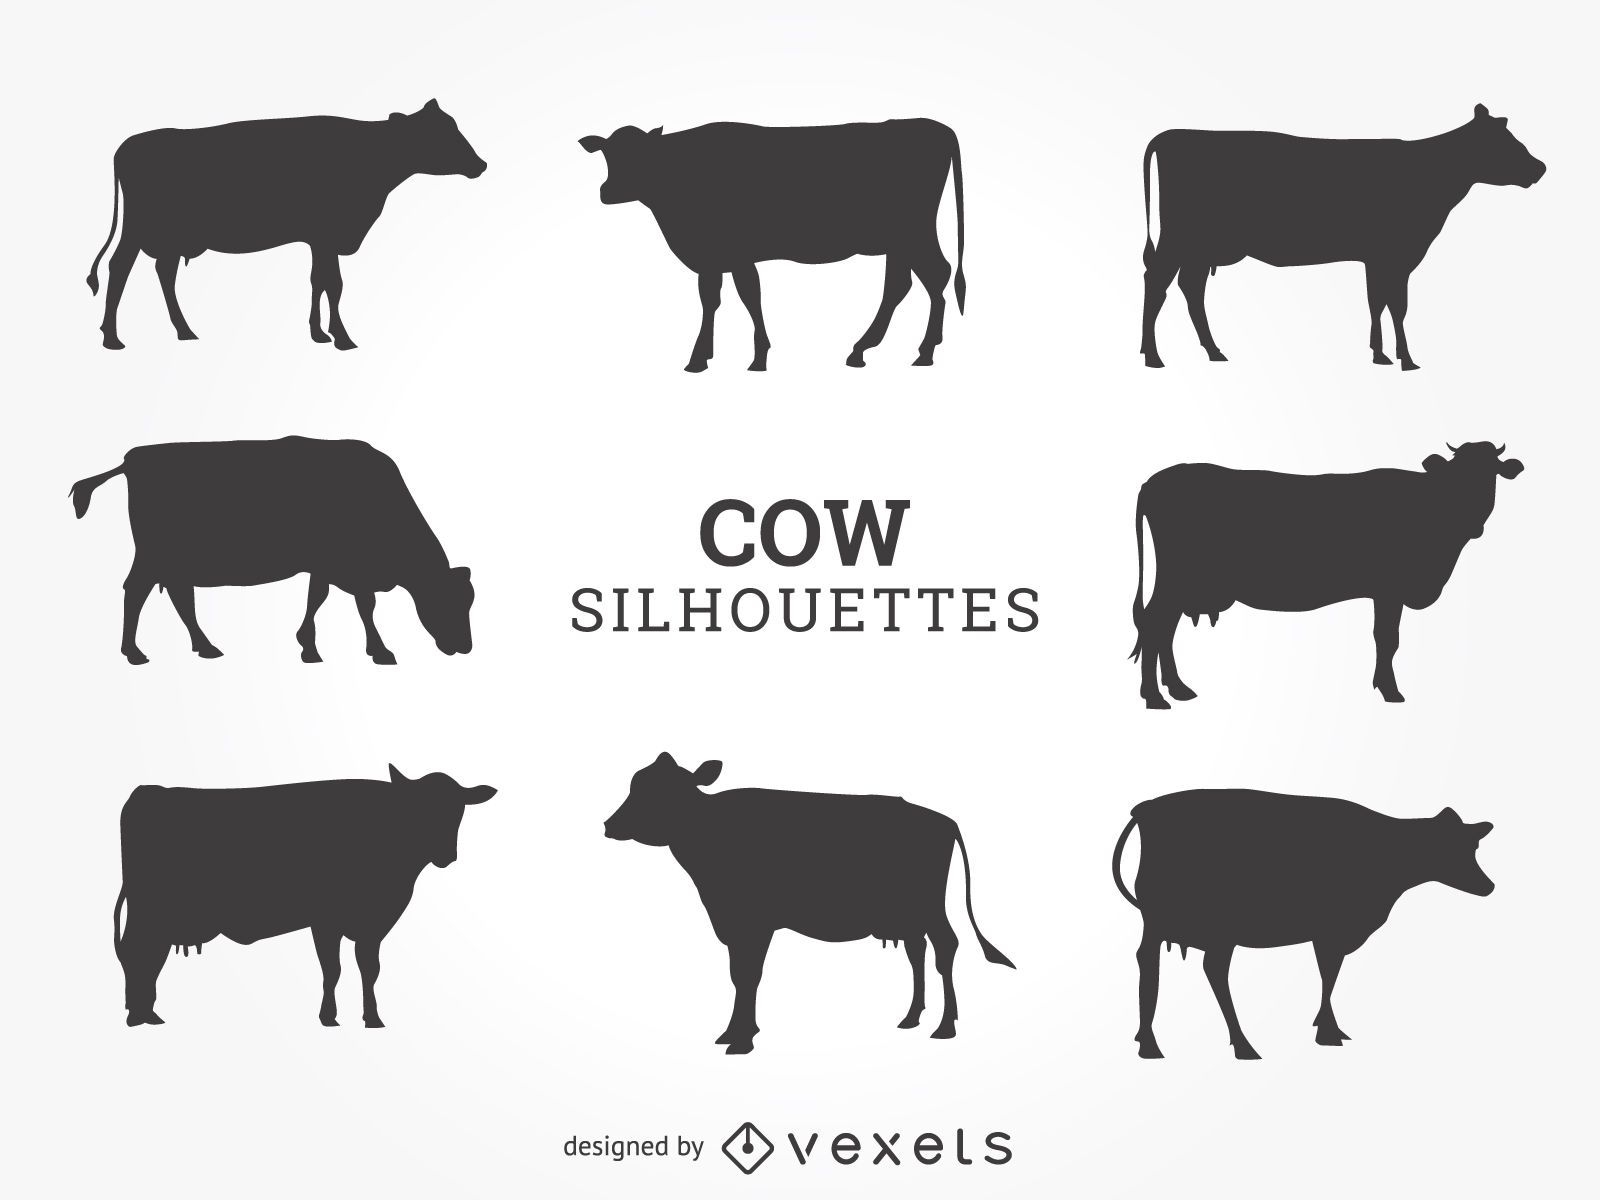 Cow silhouettes set